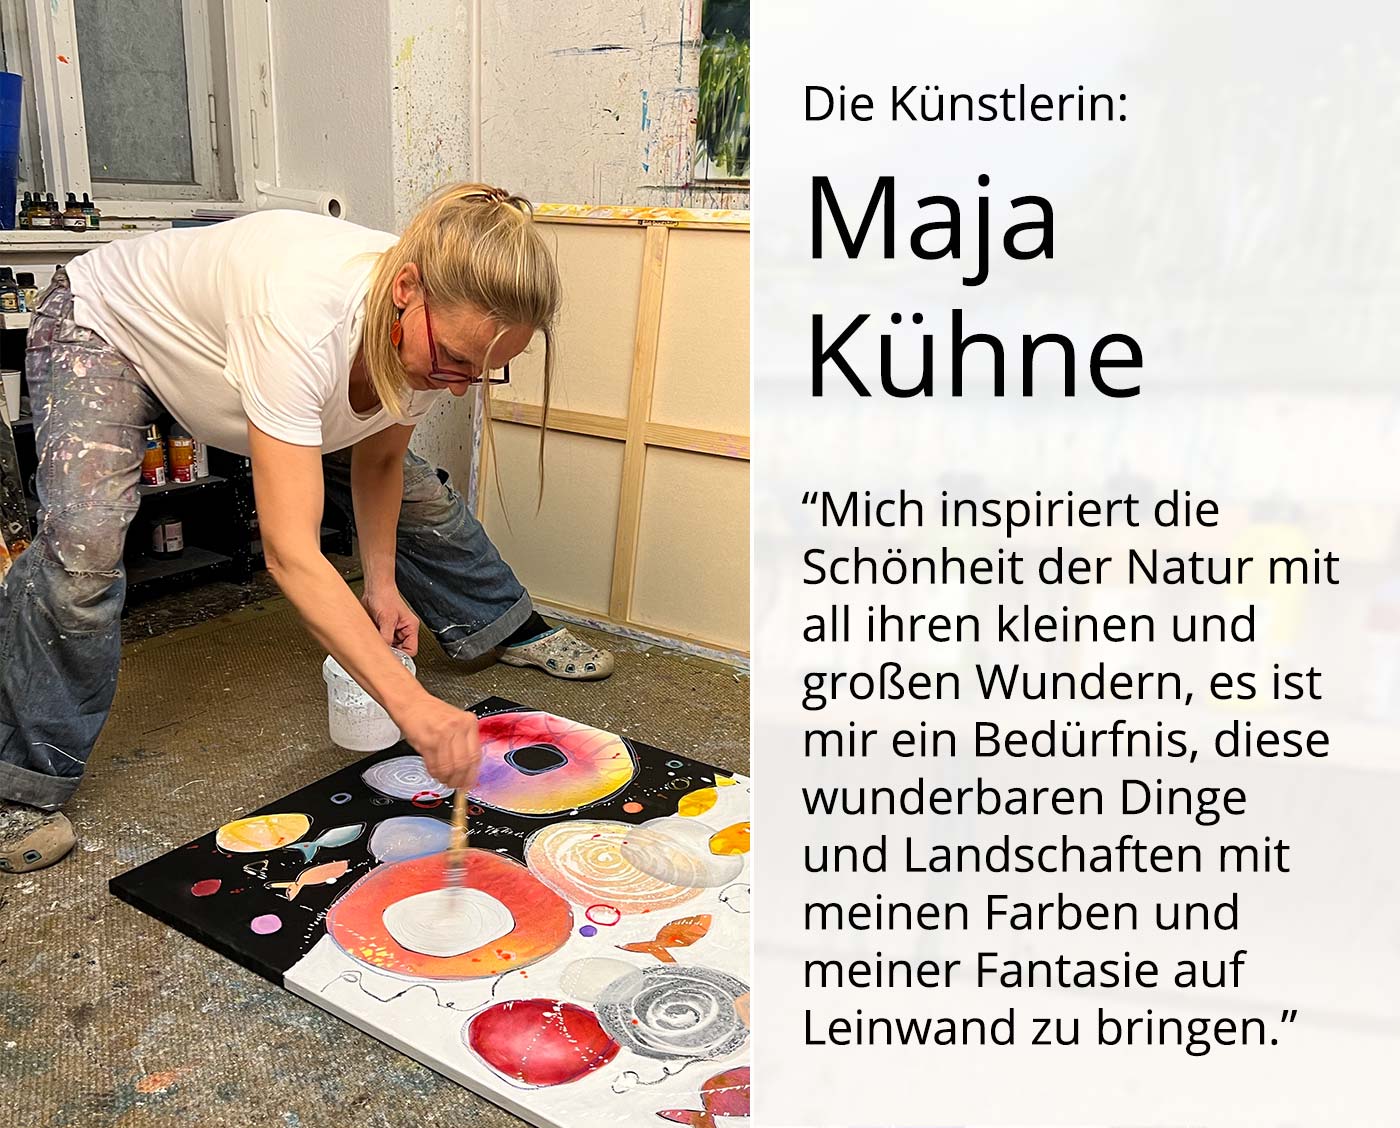 M. Kühne: "Farbspektakel", Edition, signierter Kunstdruck